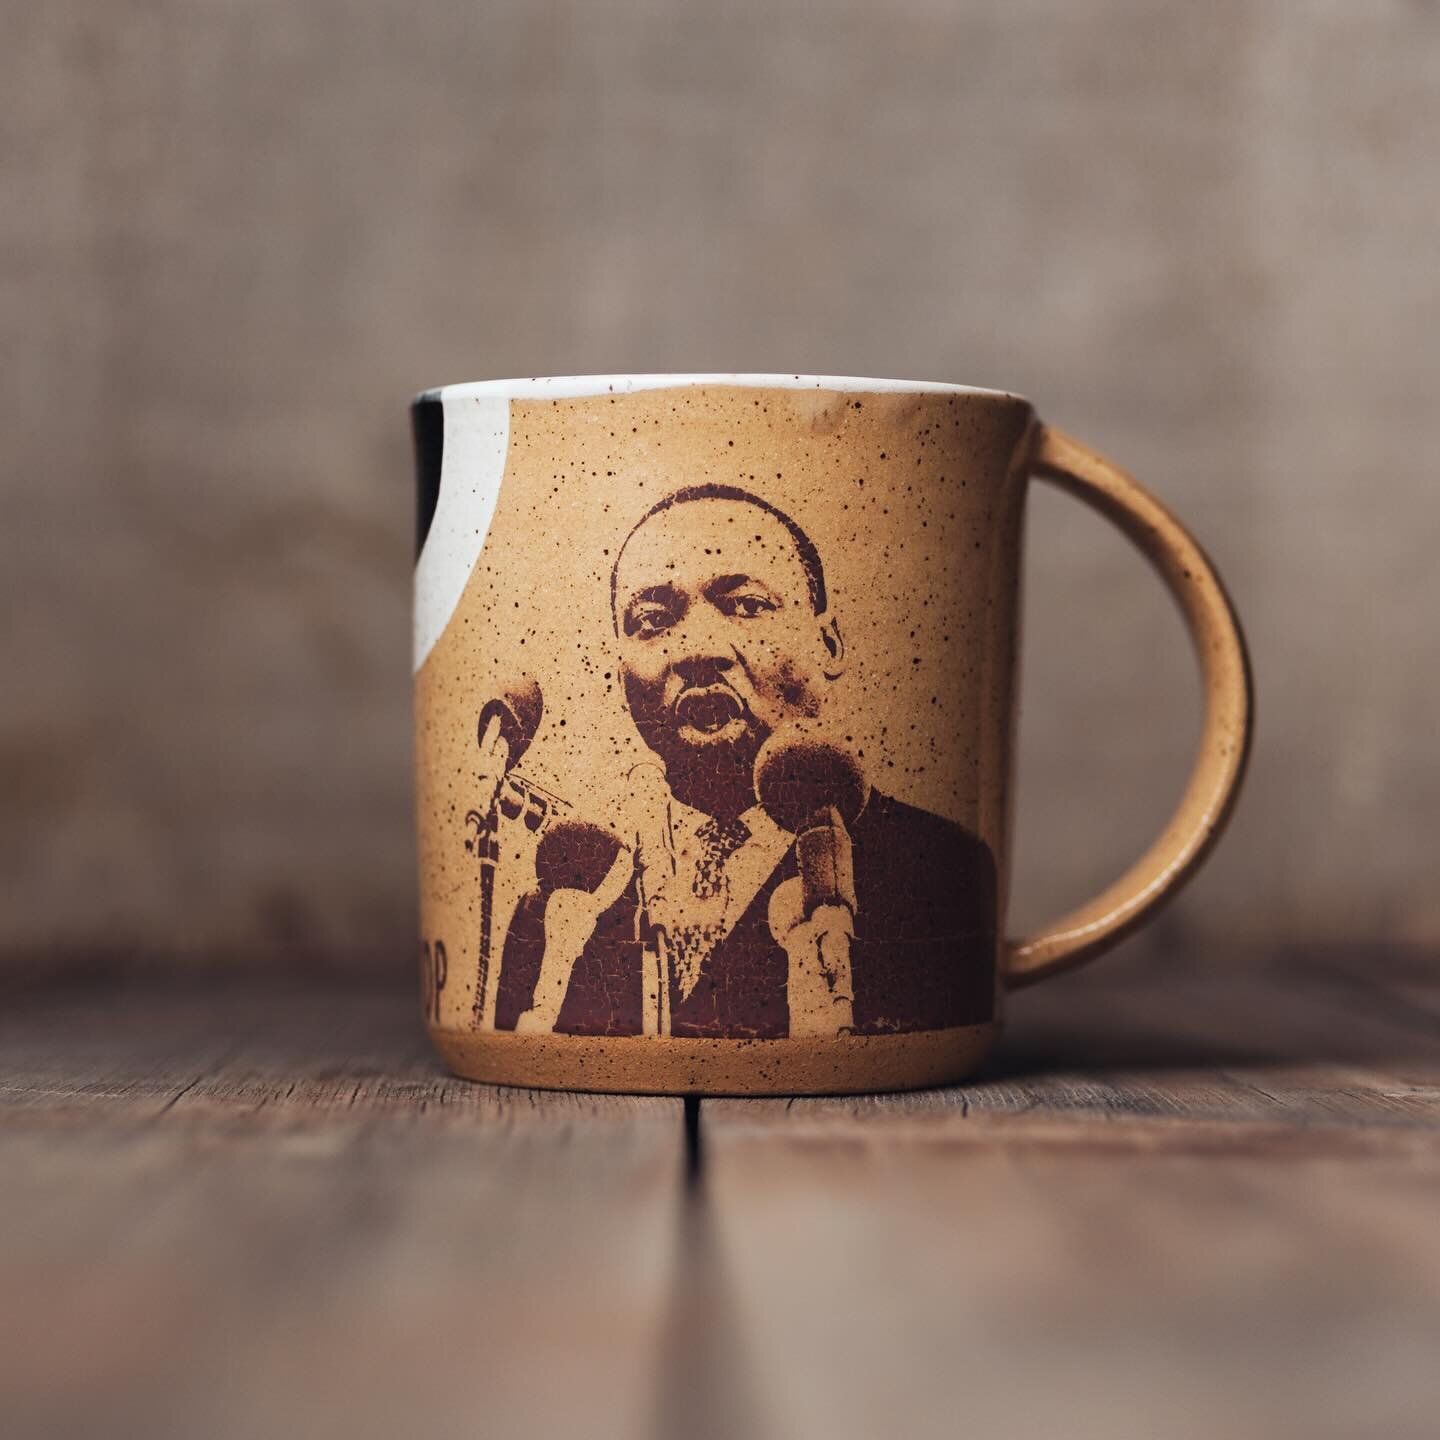 I believe in MLK&rsquo;s ambition. 
#mlk #ihaveadream #civilrights #ceramiccoffeecup